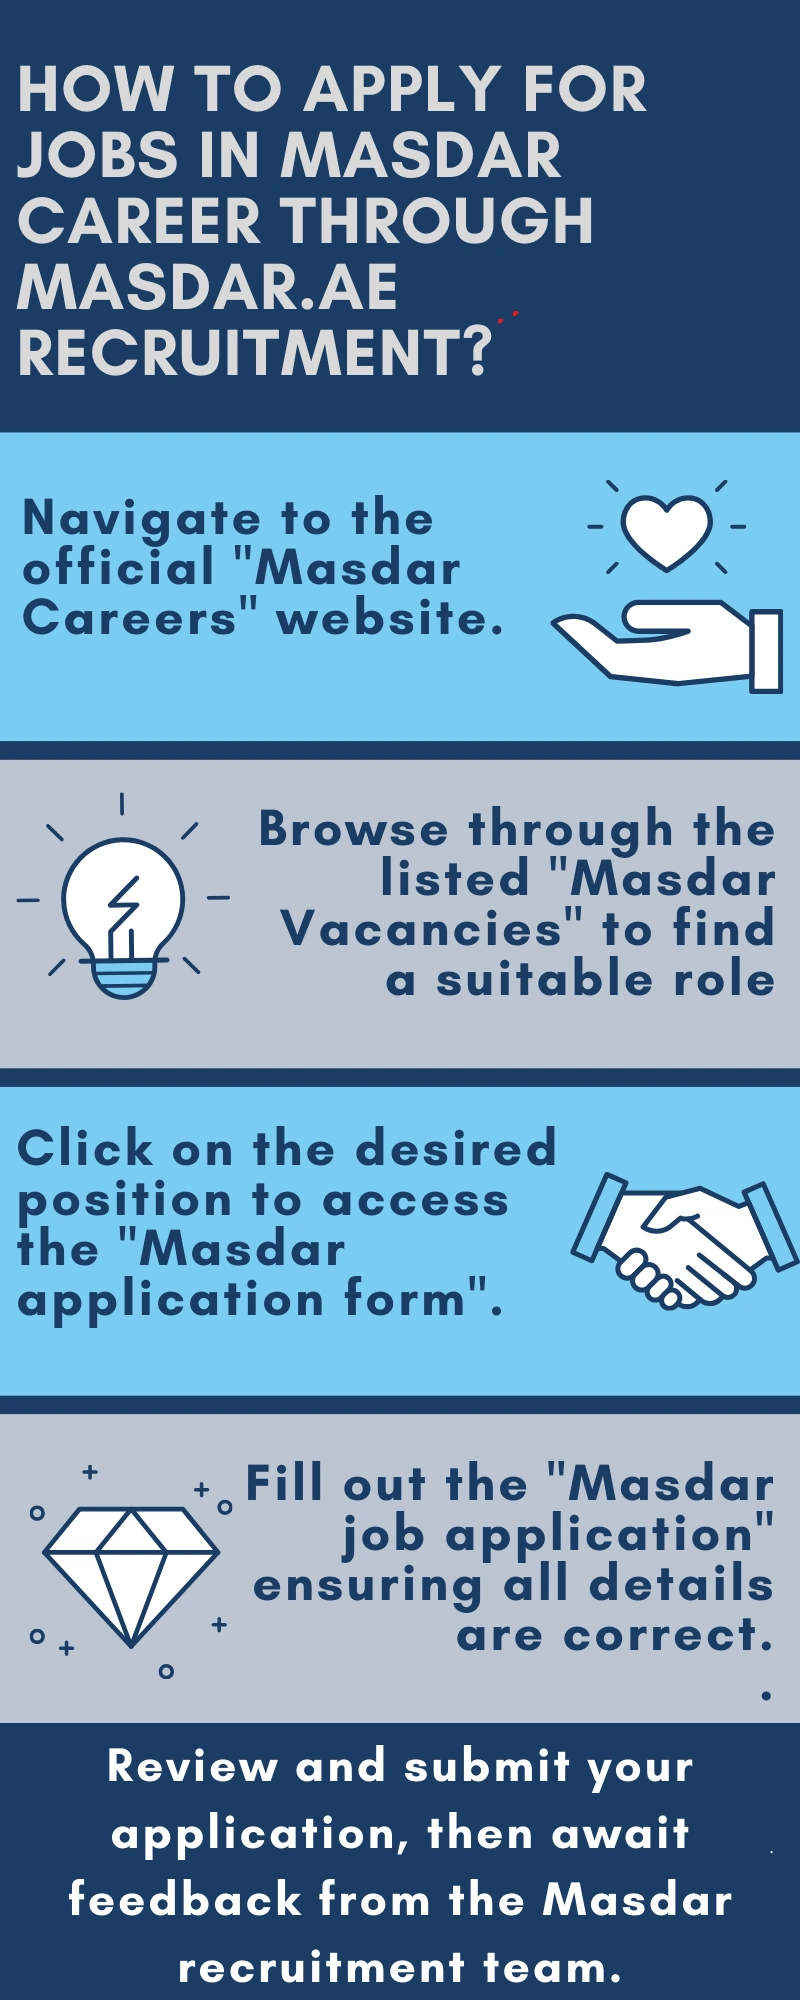 How to Apply for Jobs in Masdar Career through masdar.ae recruitment?